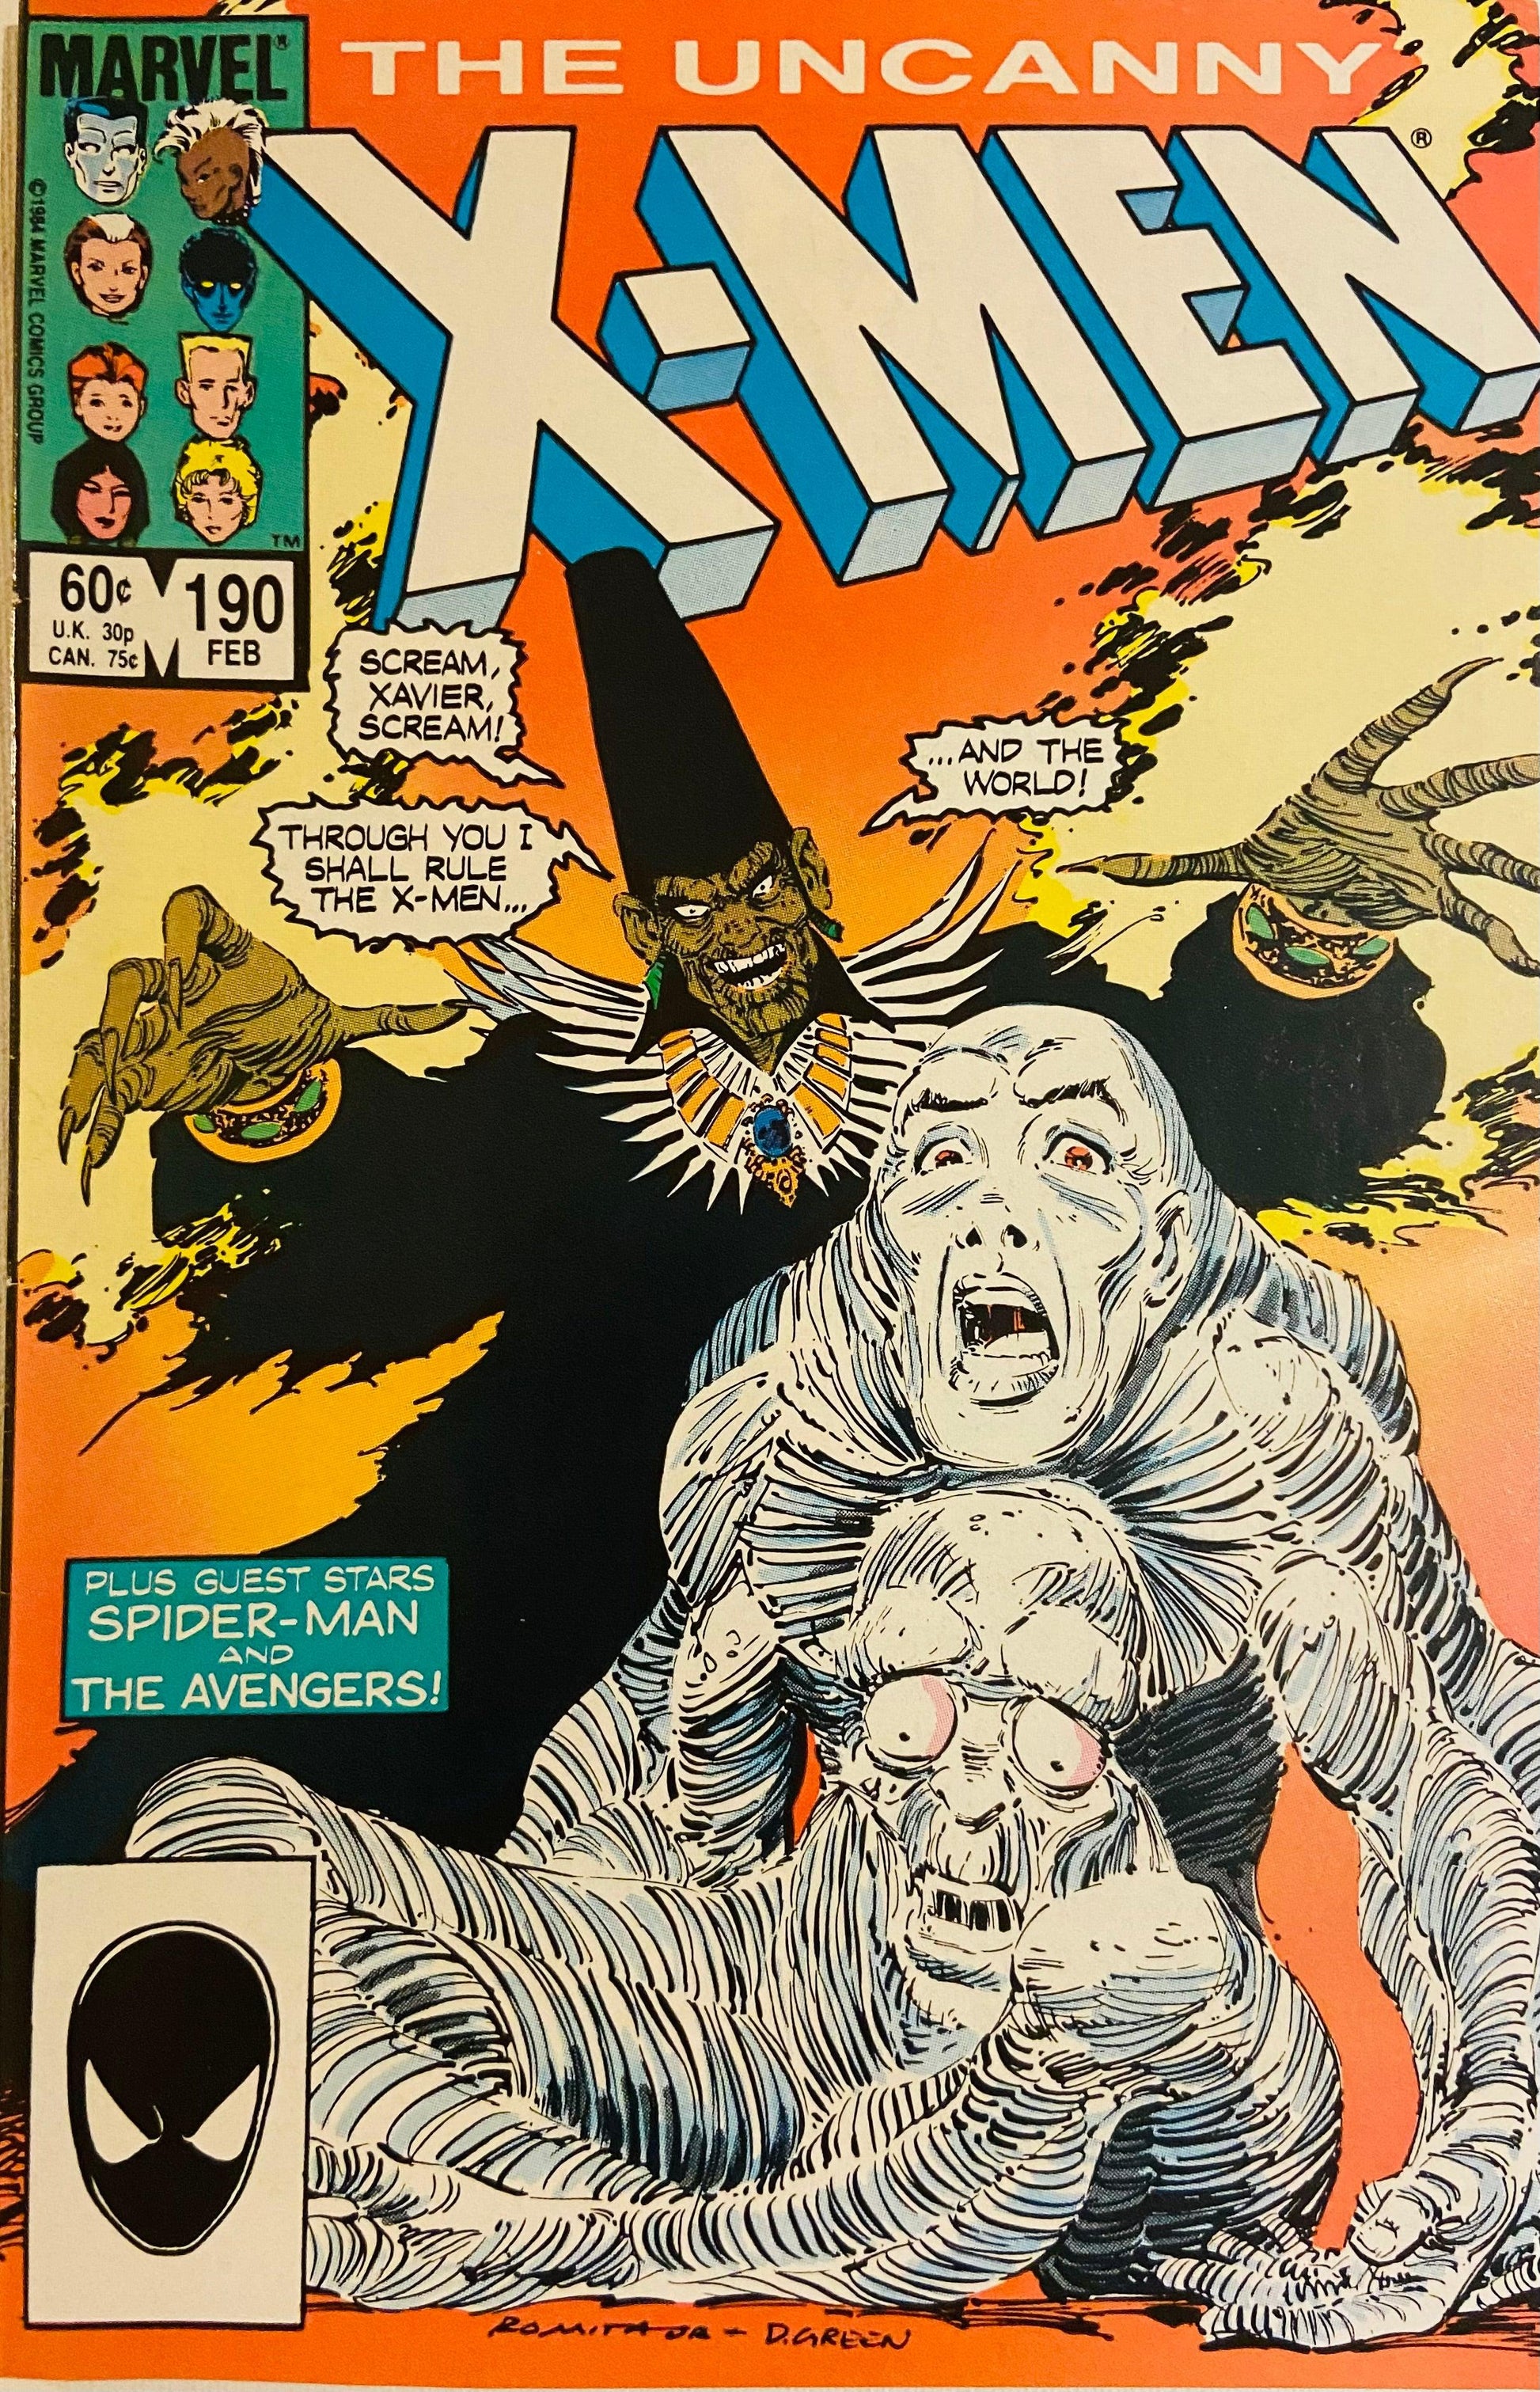 Uncanny X-men #190 - HolyGrail Comix